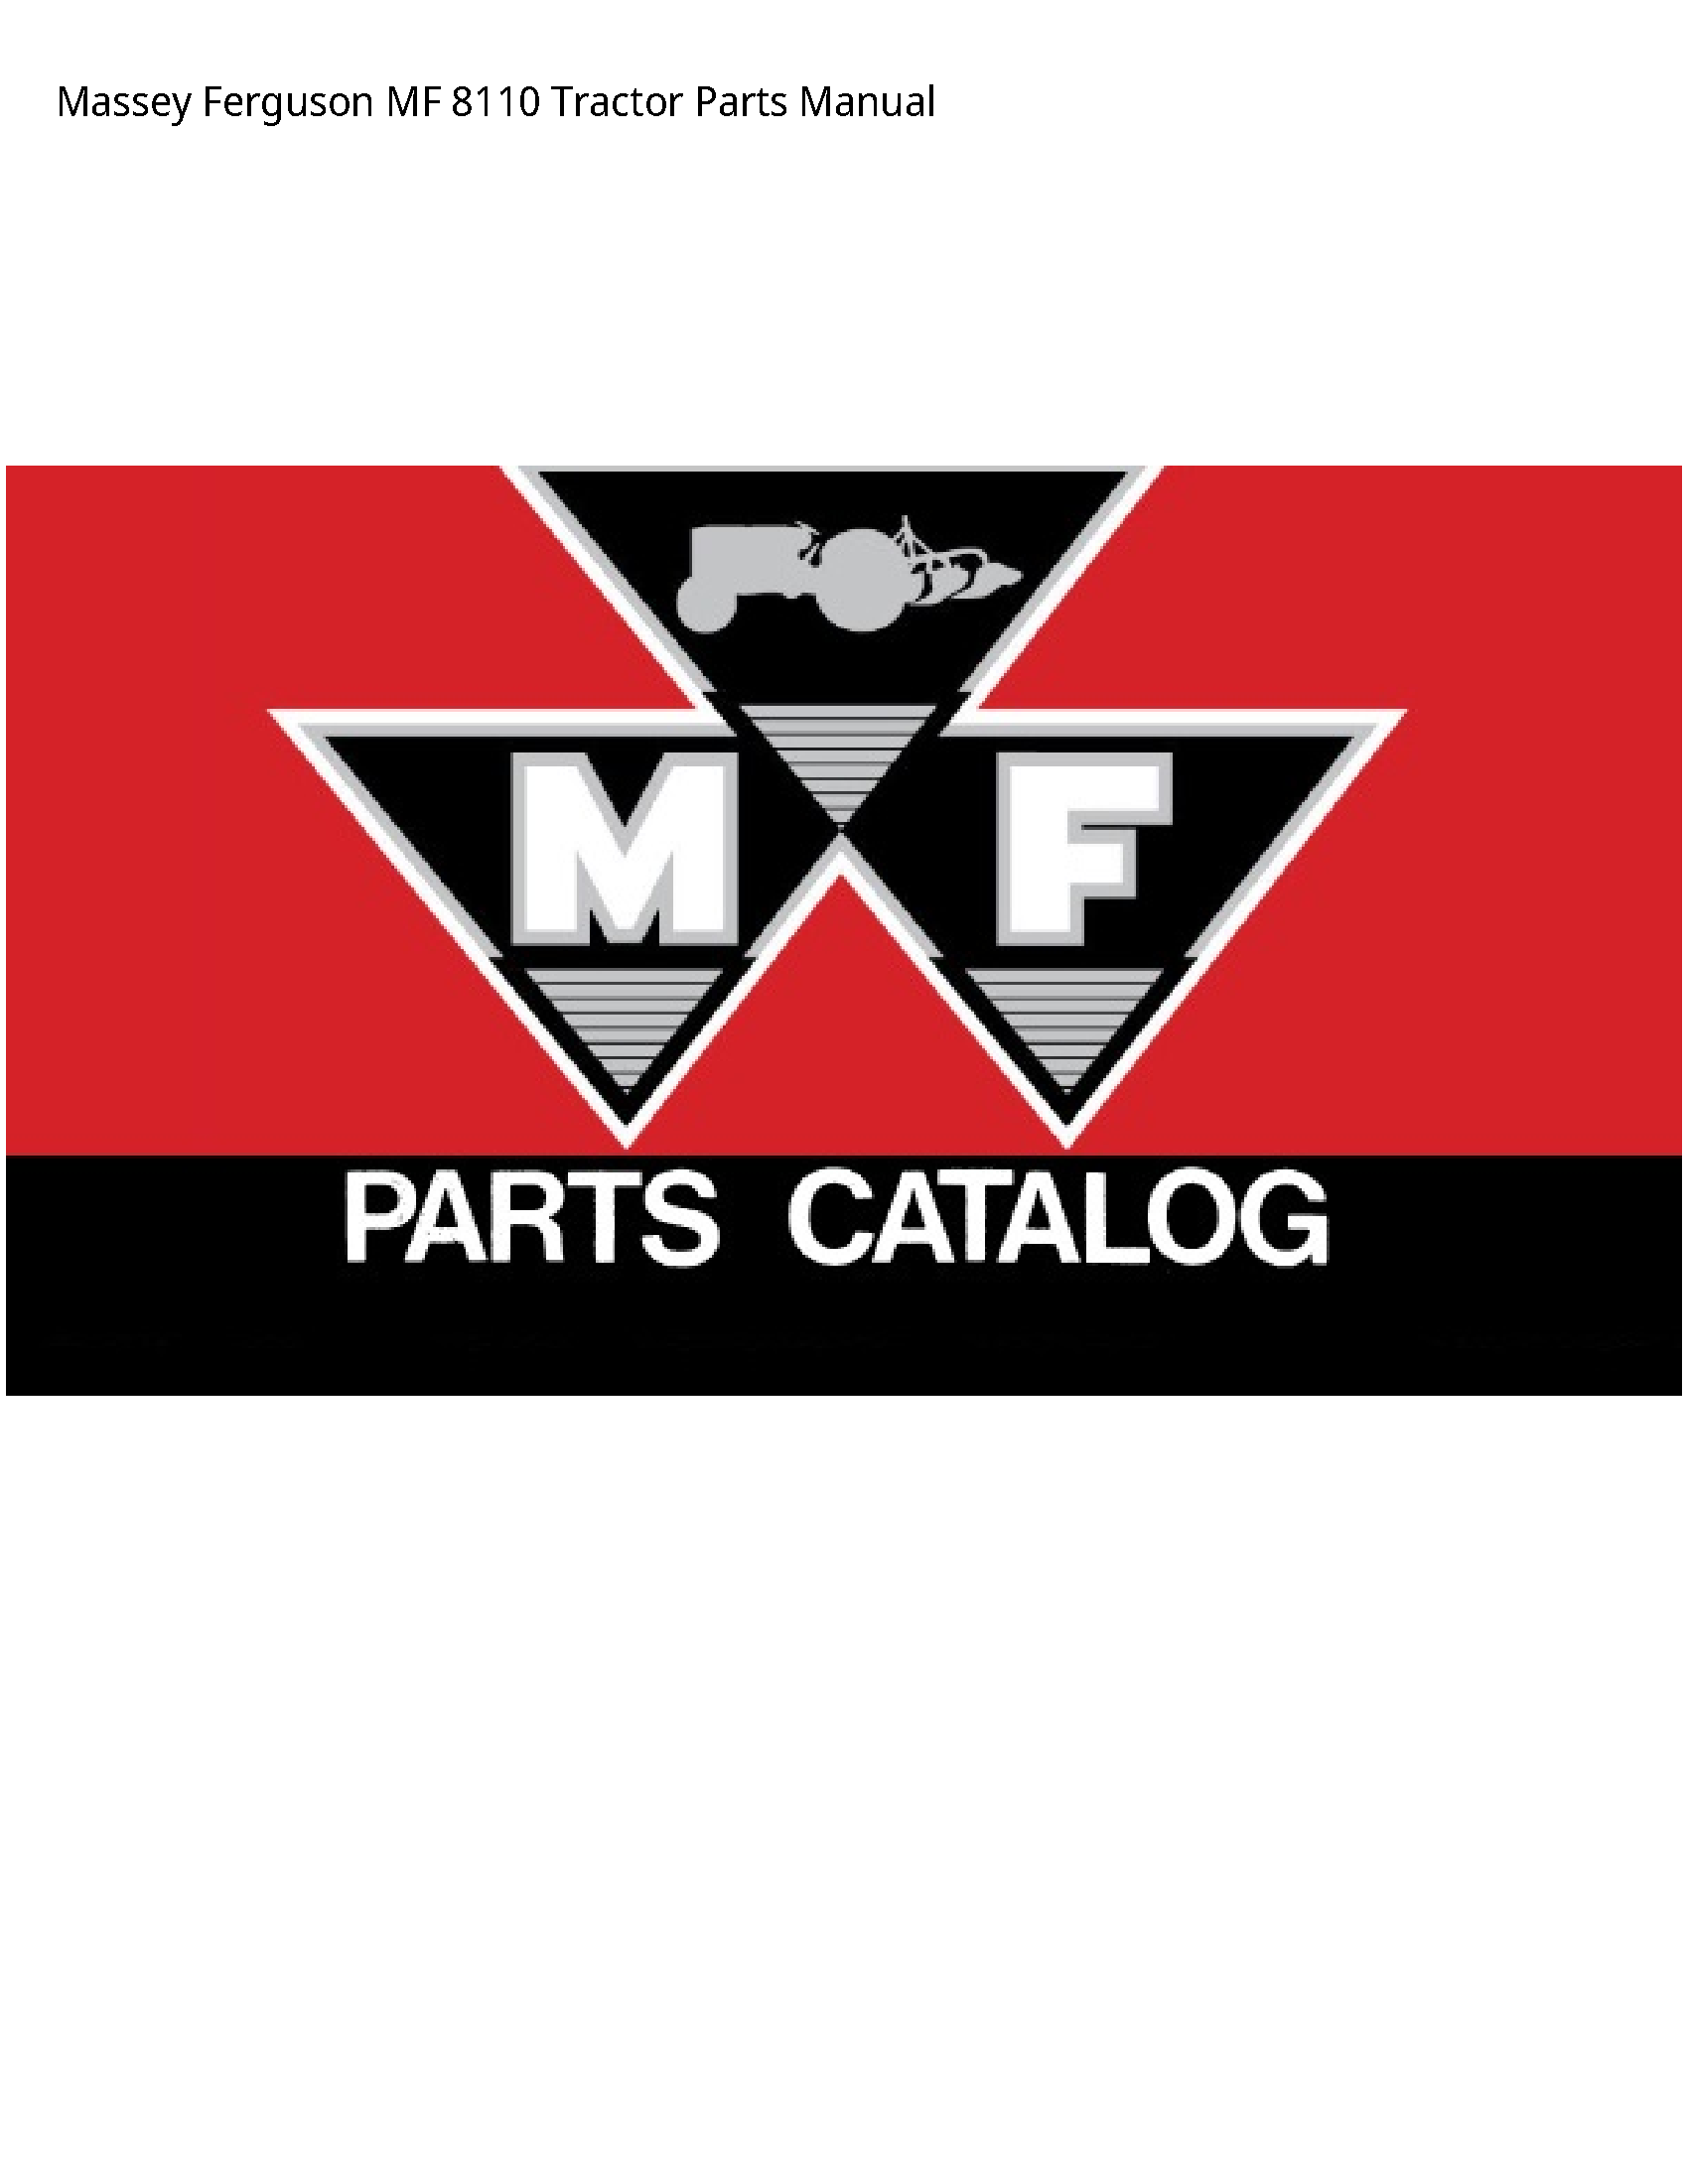 Massey Ferguson 8110 MF Tractor Parts manual